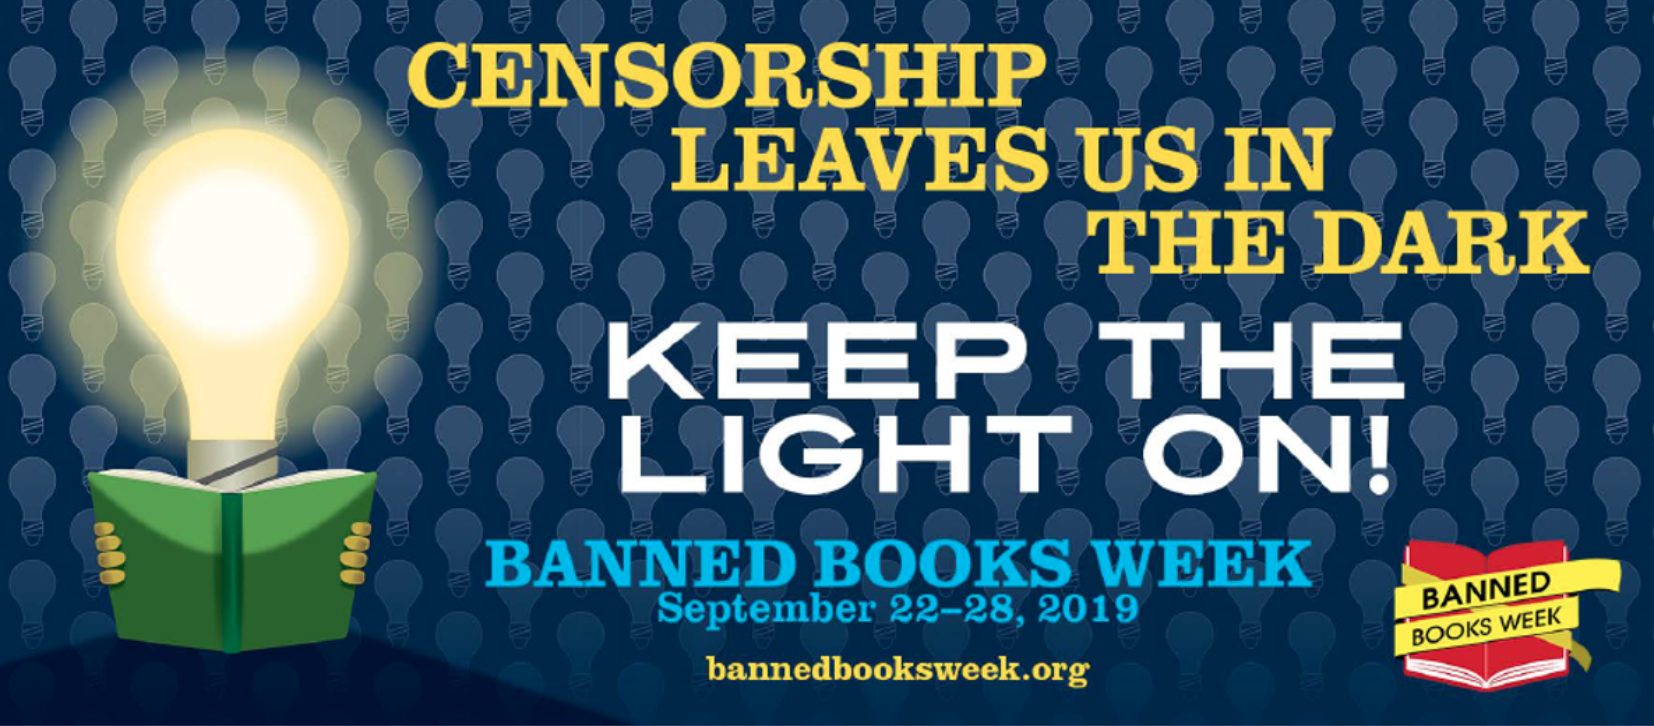 Imagem promocional da Banned Books Week